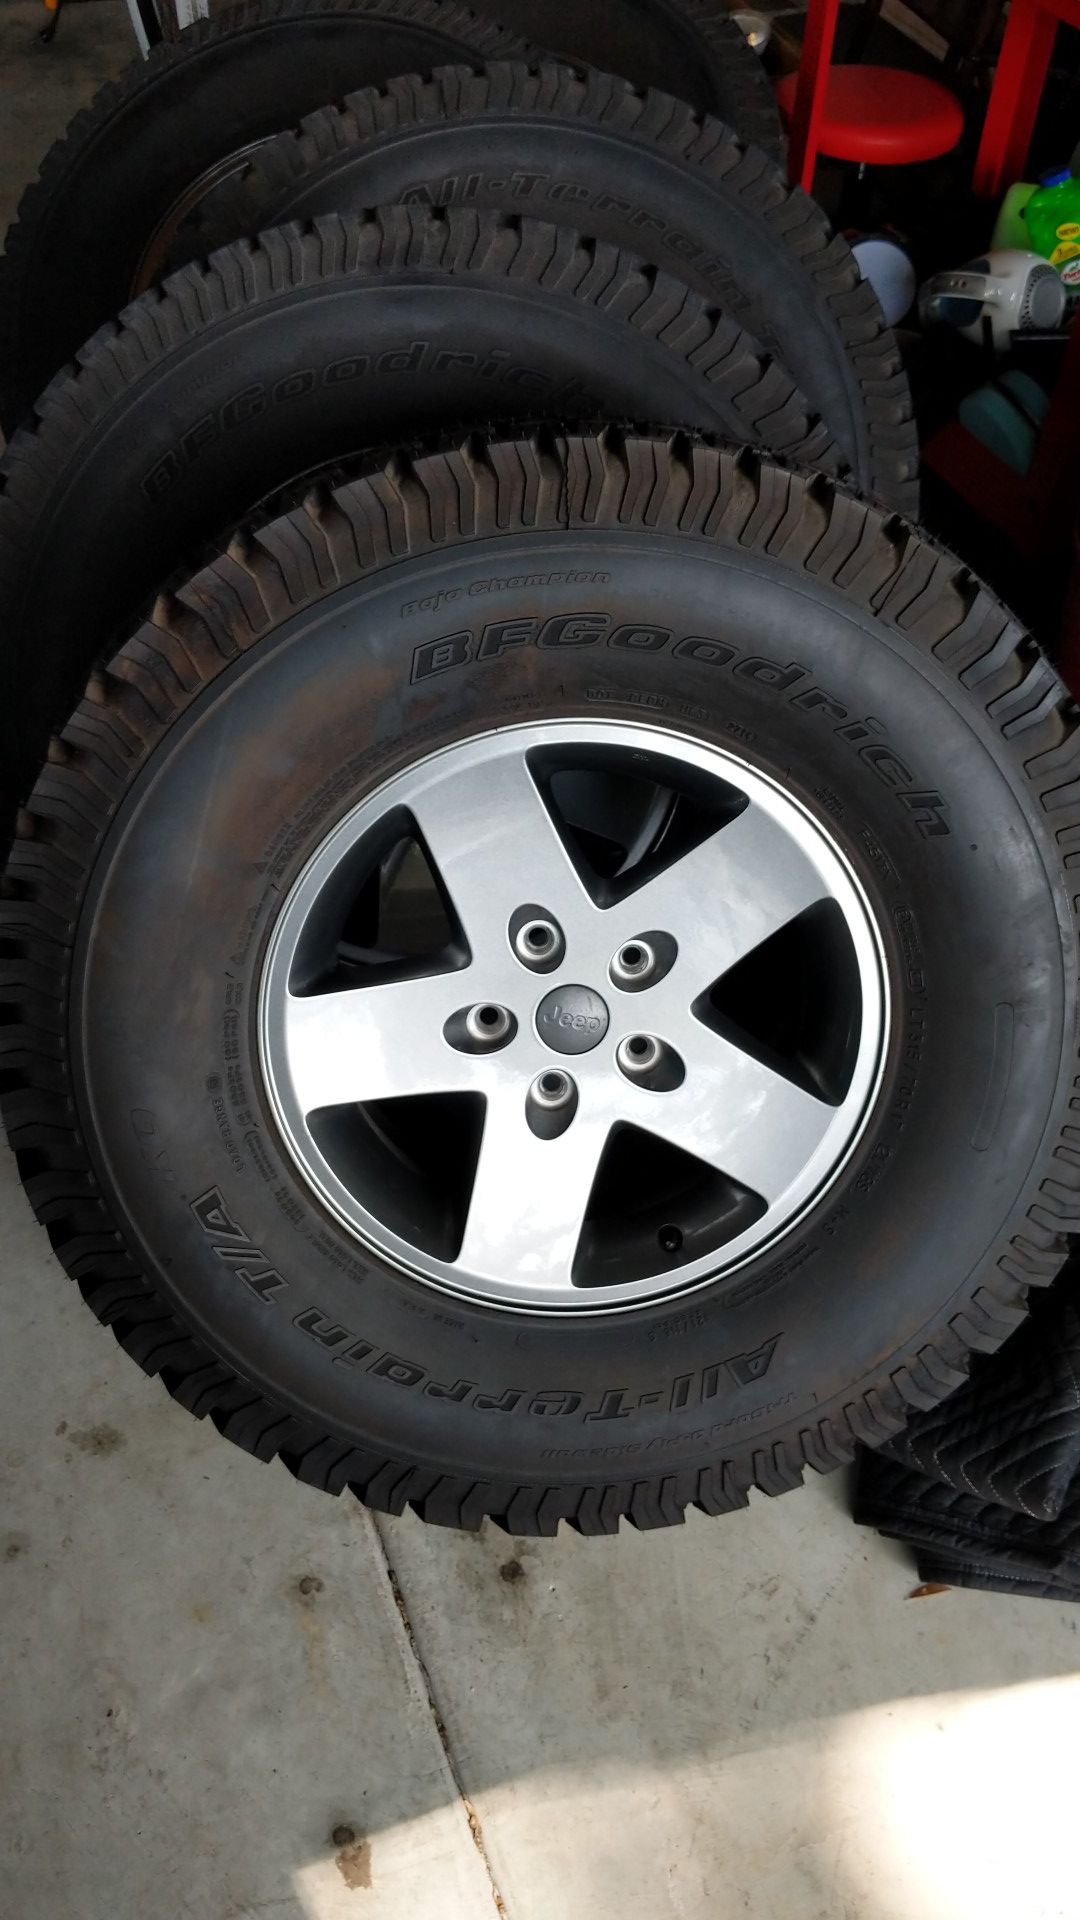 Jeep JK wheels with BF Goodrich All-terrains